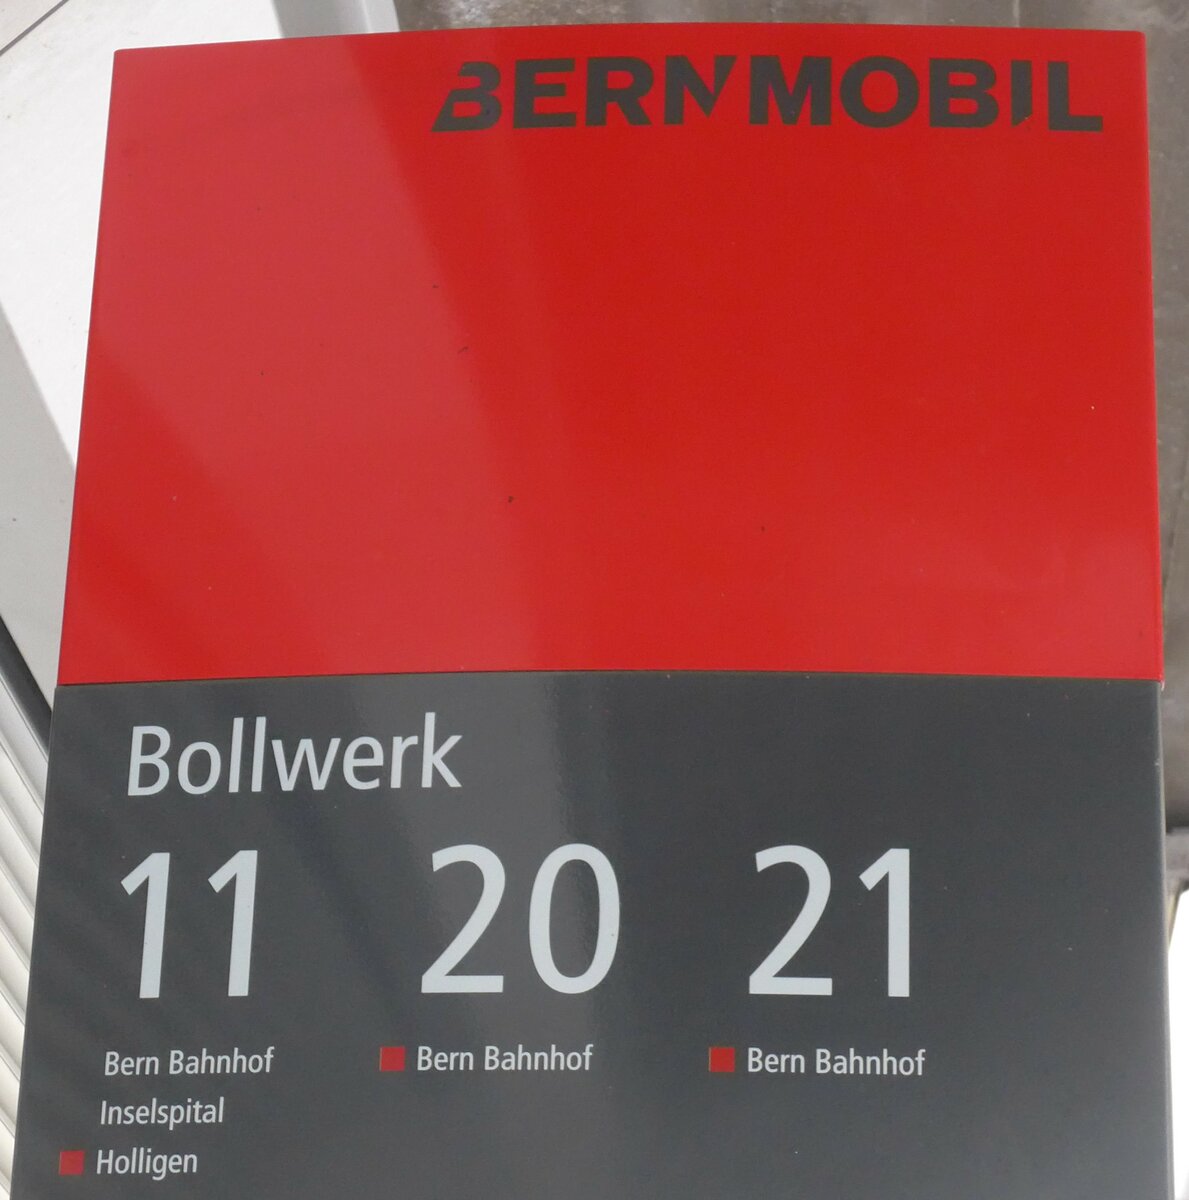 (196'358) - BERNMOBIL-Haltestellenschild - Bern, Bollwerk - am 1. September 2018